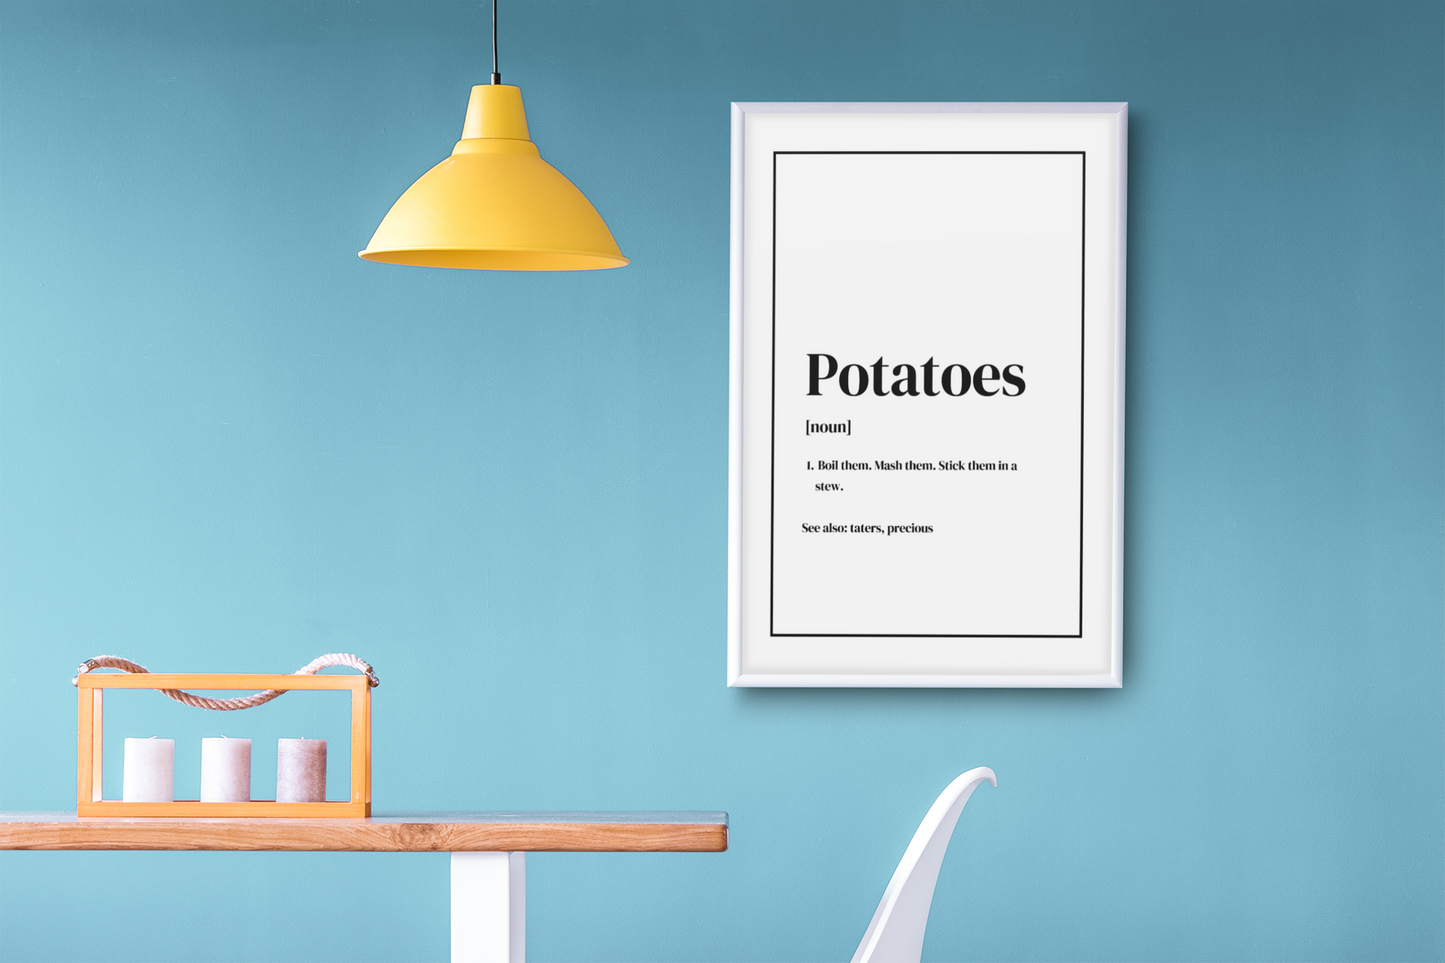 potatoes boil em mash em stick em in a stew poster